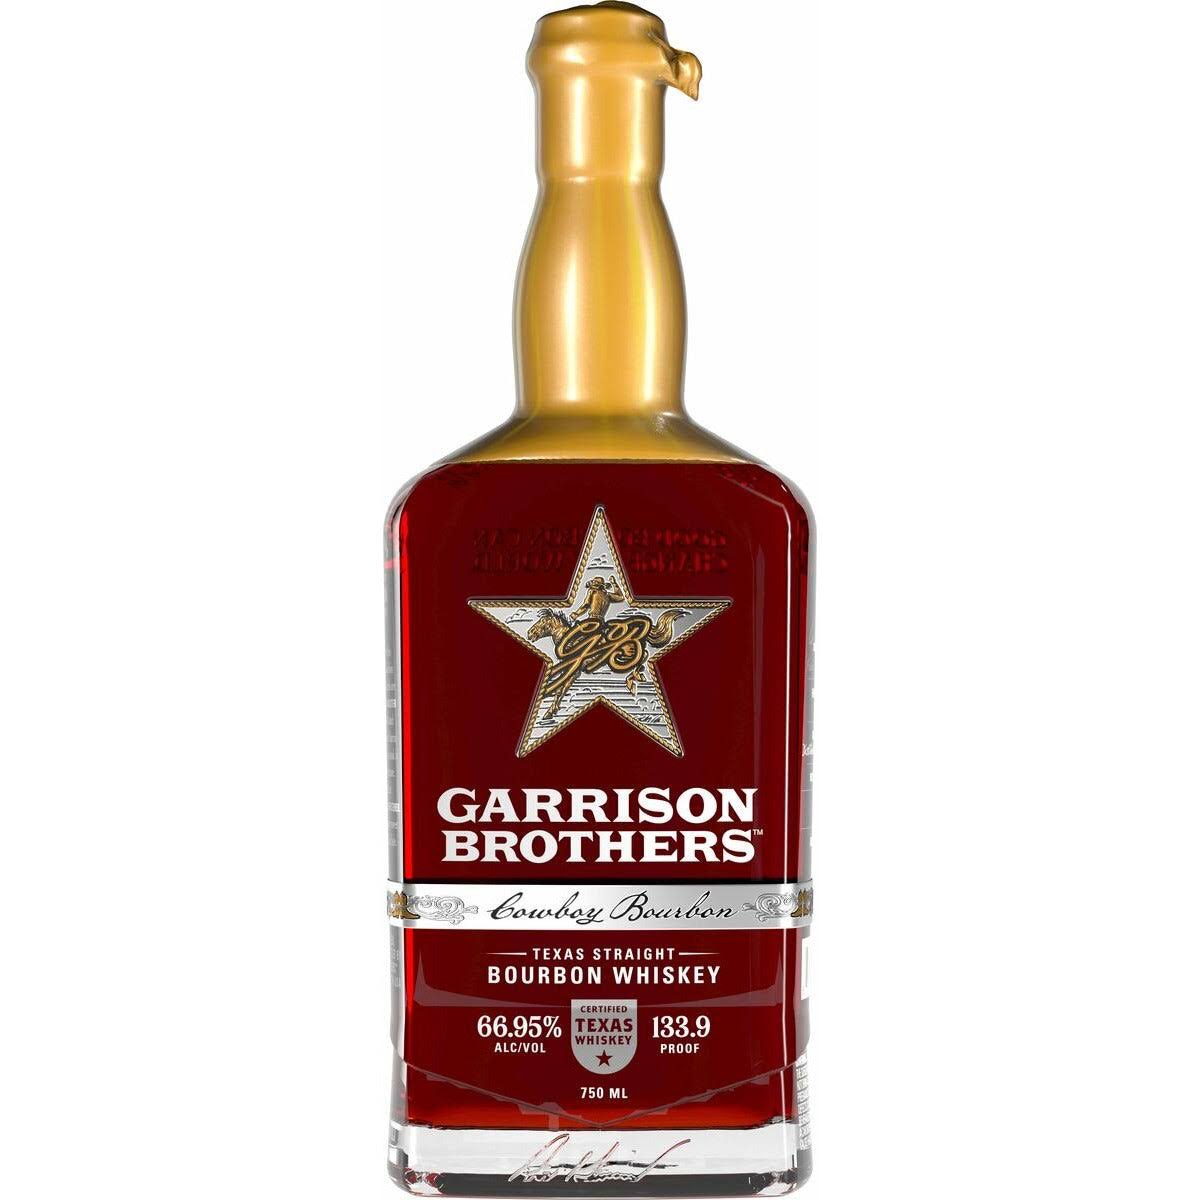 Garrison Brothers Bourbon Whiskey, Cowboy Bourbon, Texas Straight - 750 ml